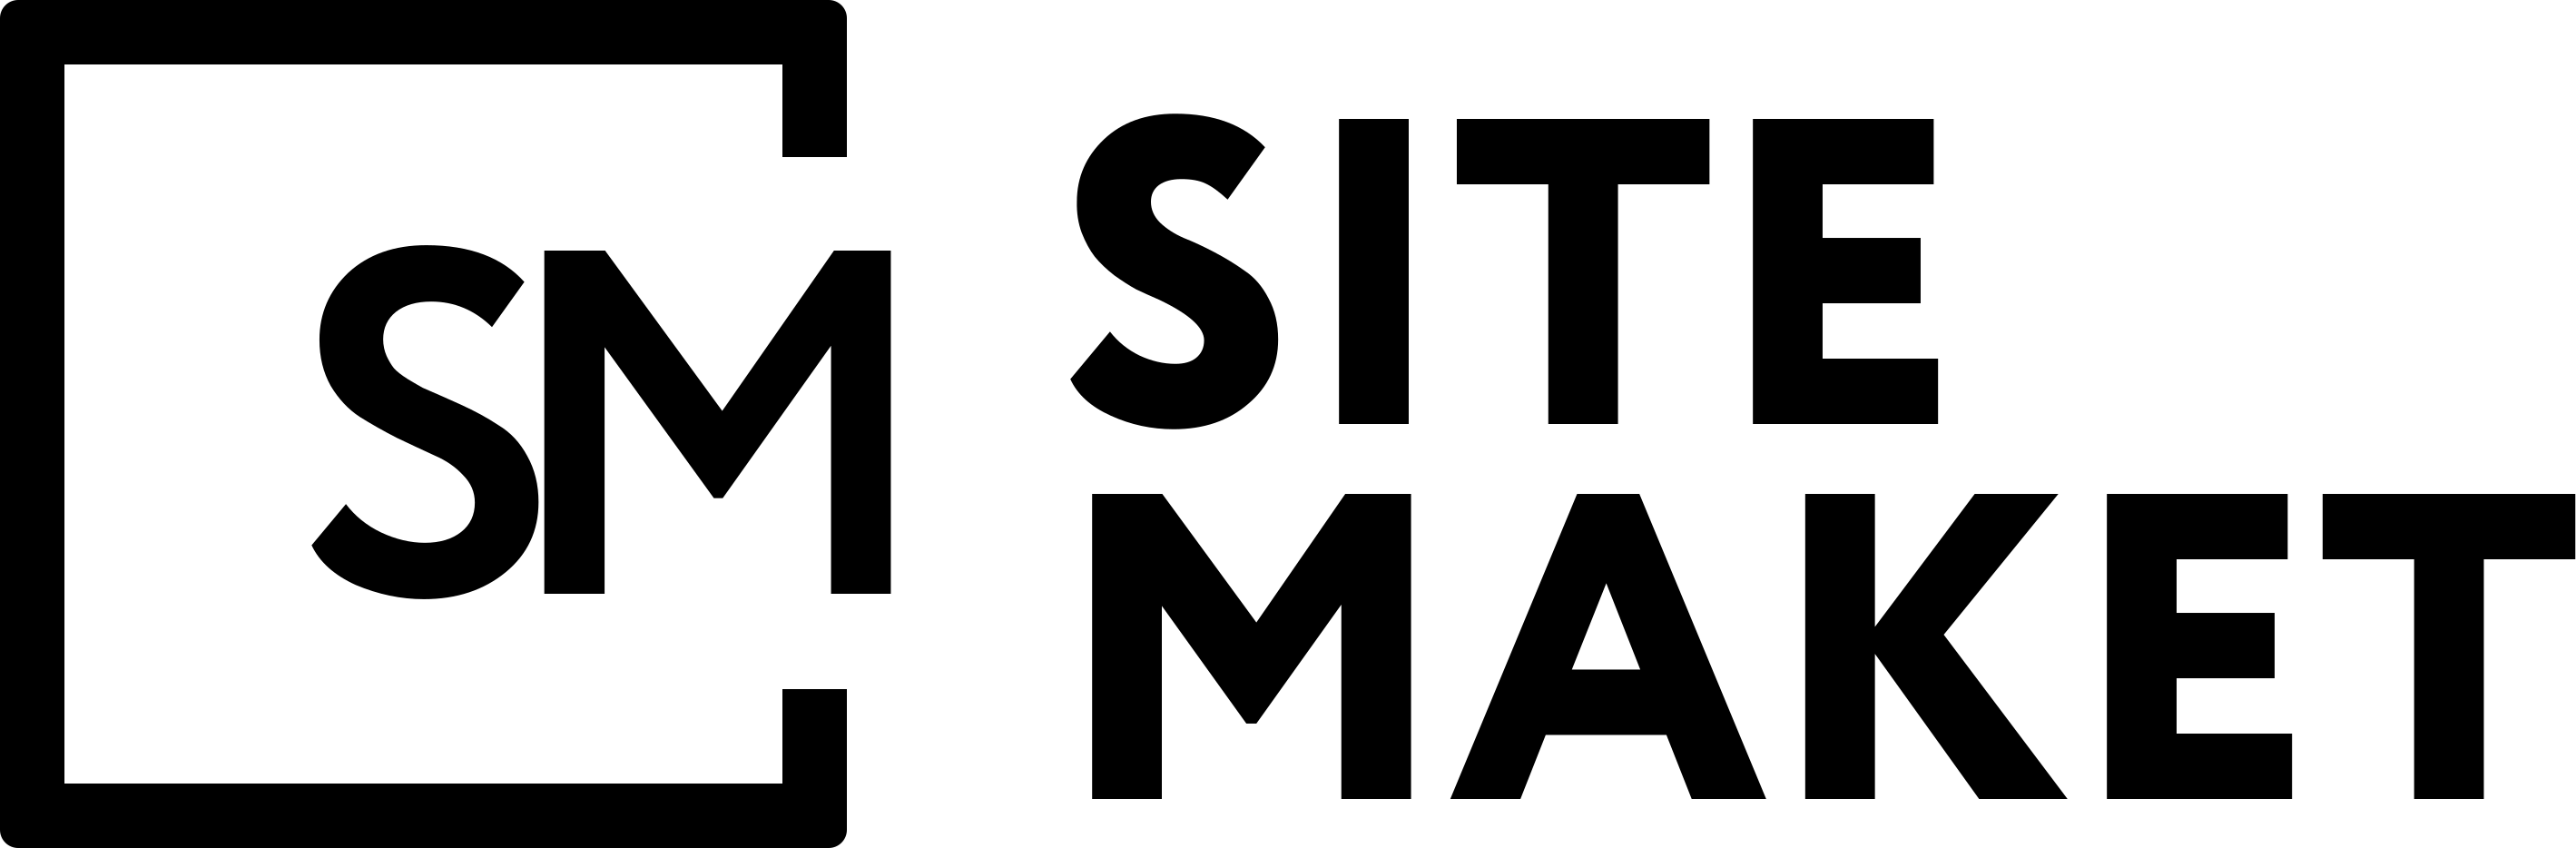 brand-logo-dark